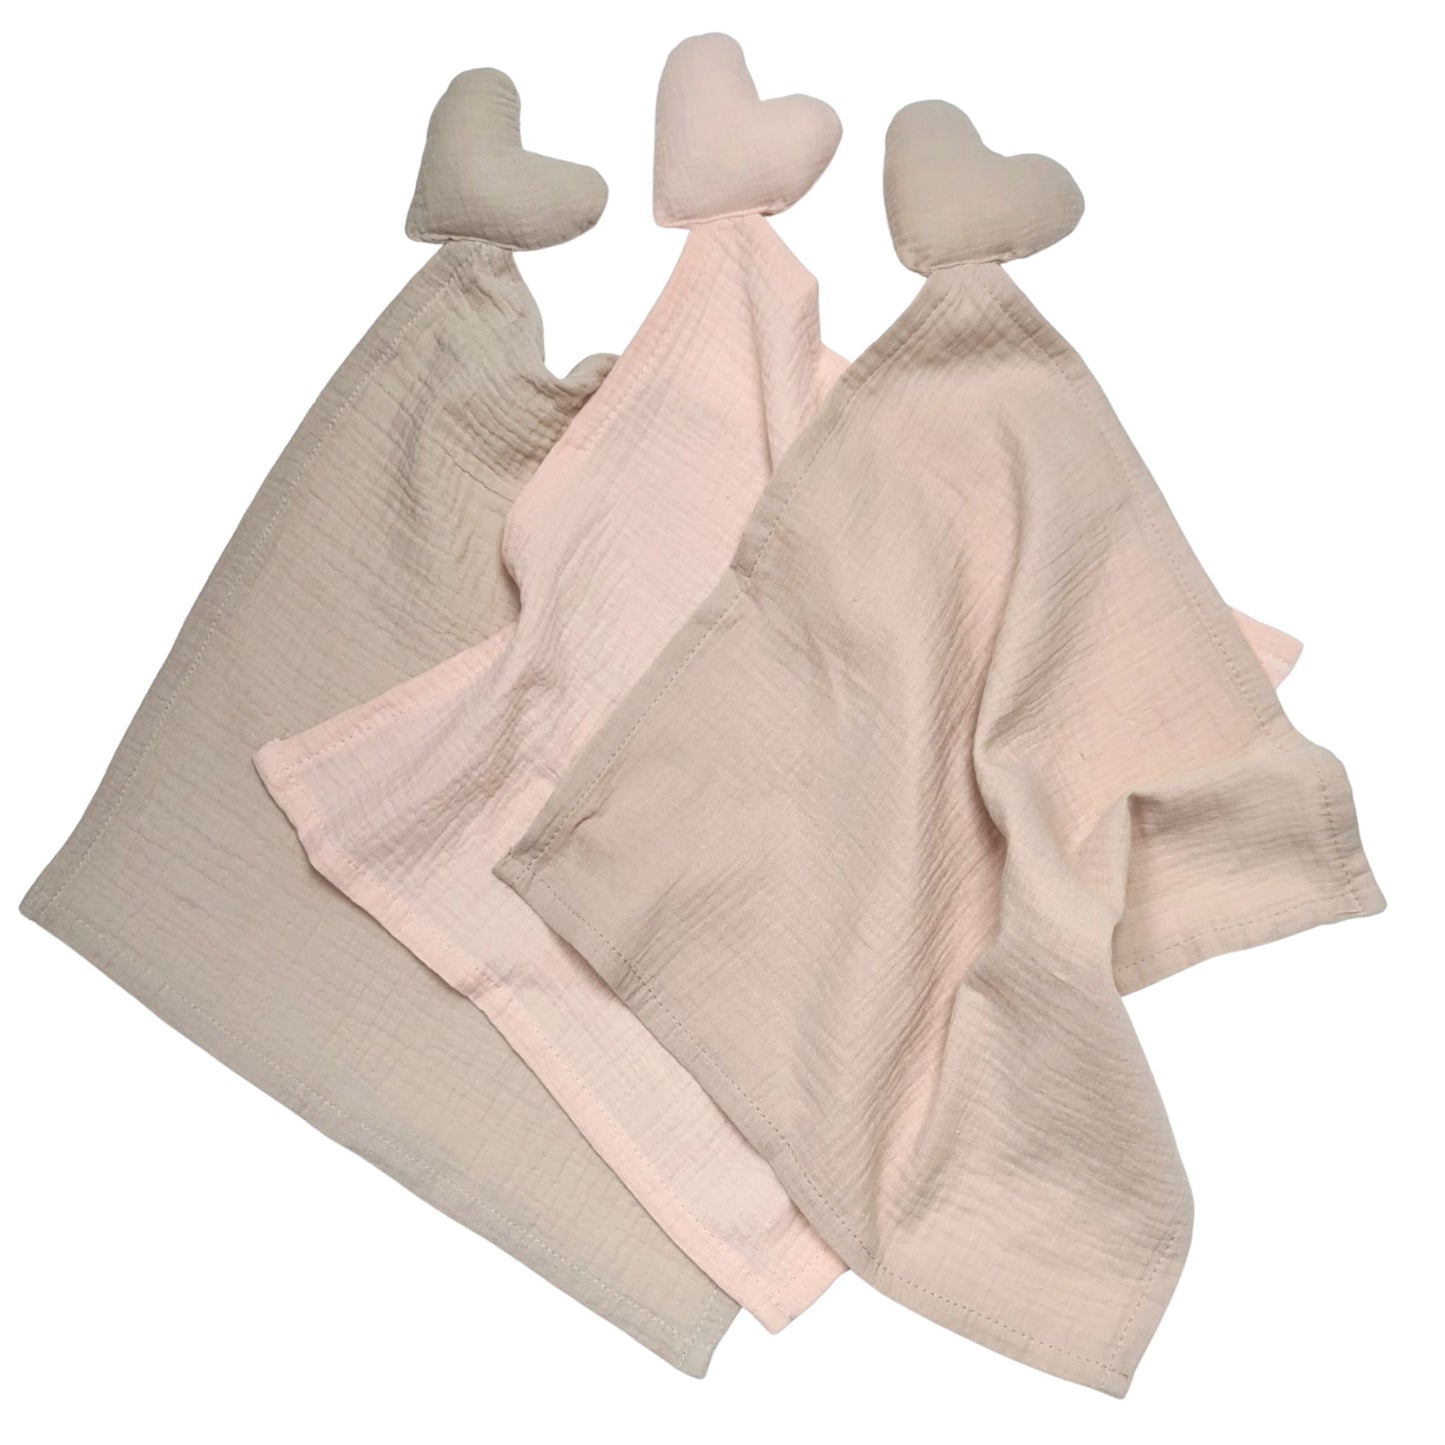 muslin squares 3 pack tan pink colours comforter blanket